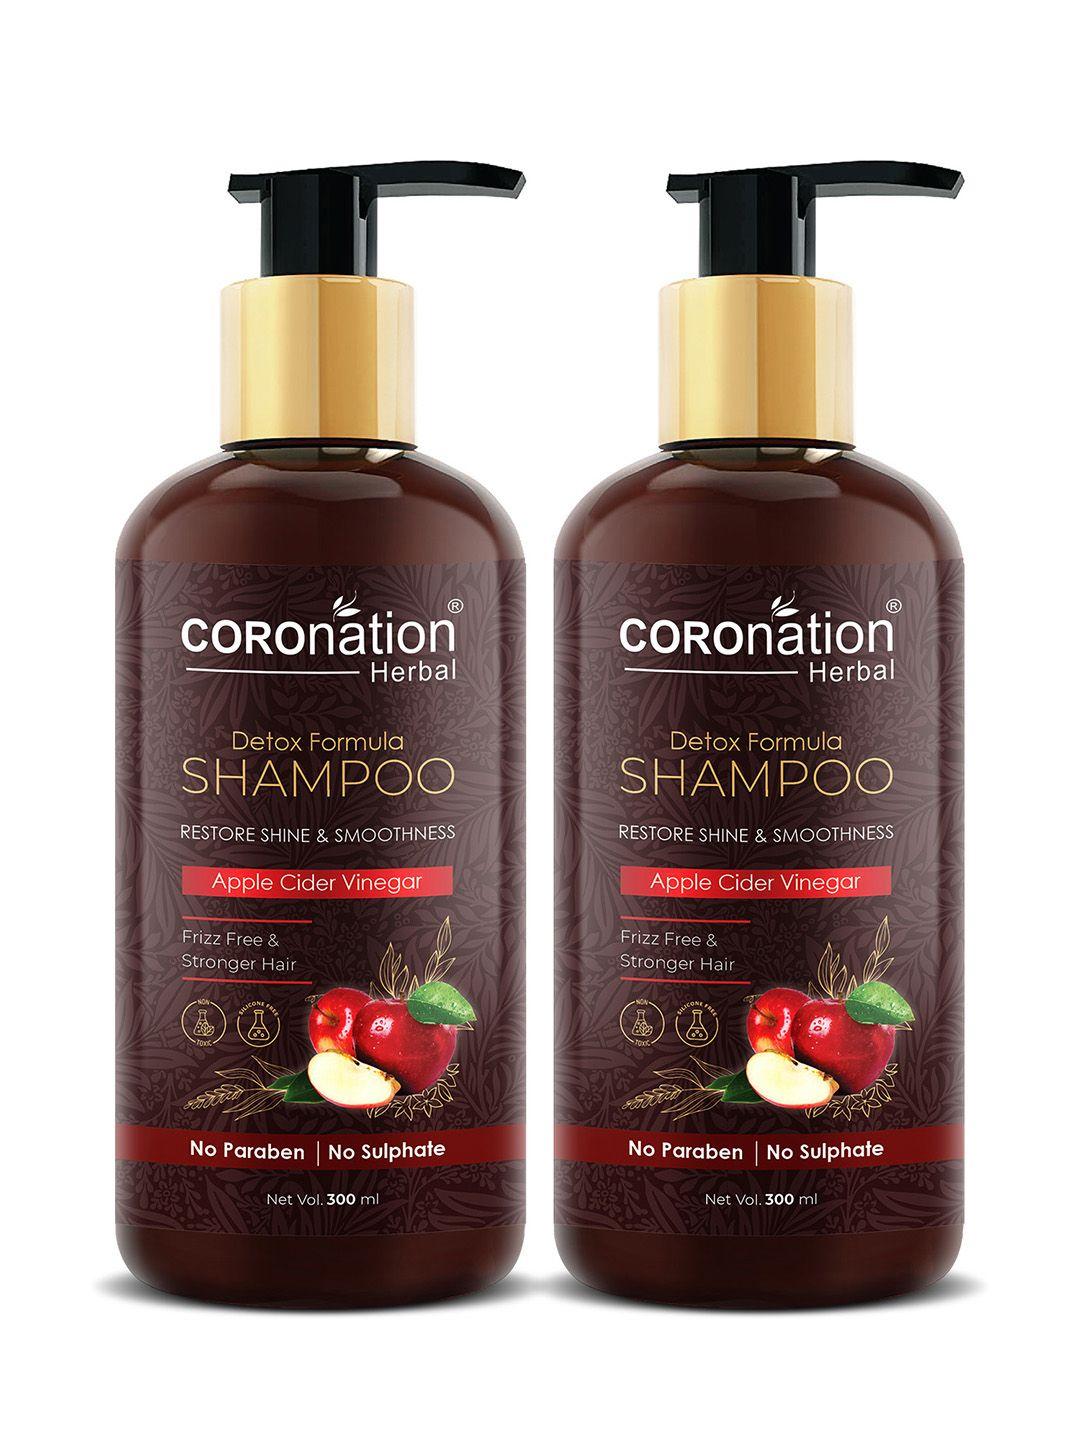 coronation herbal set of 2 apple cider vinegar detox formula shampoo 300 ml each